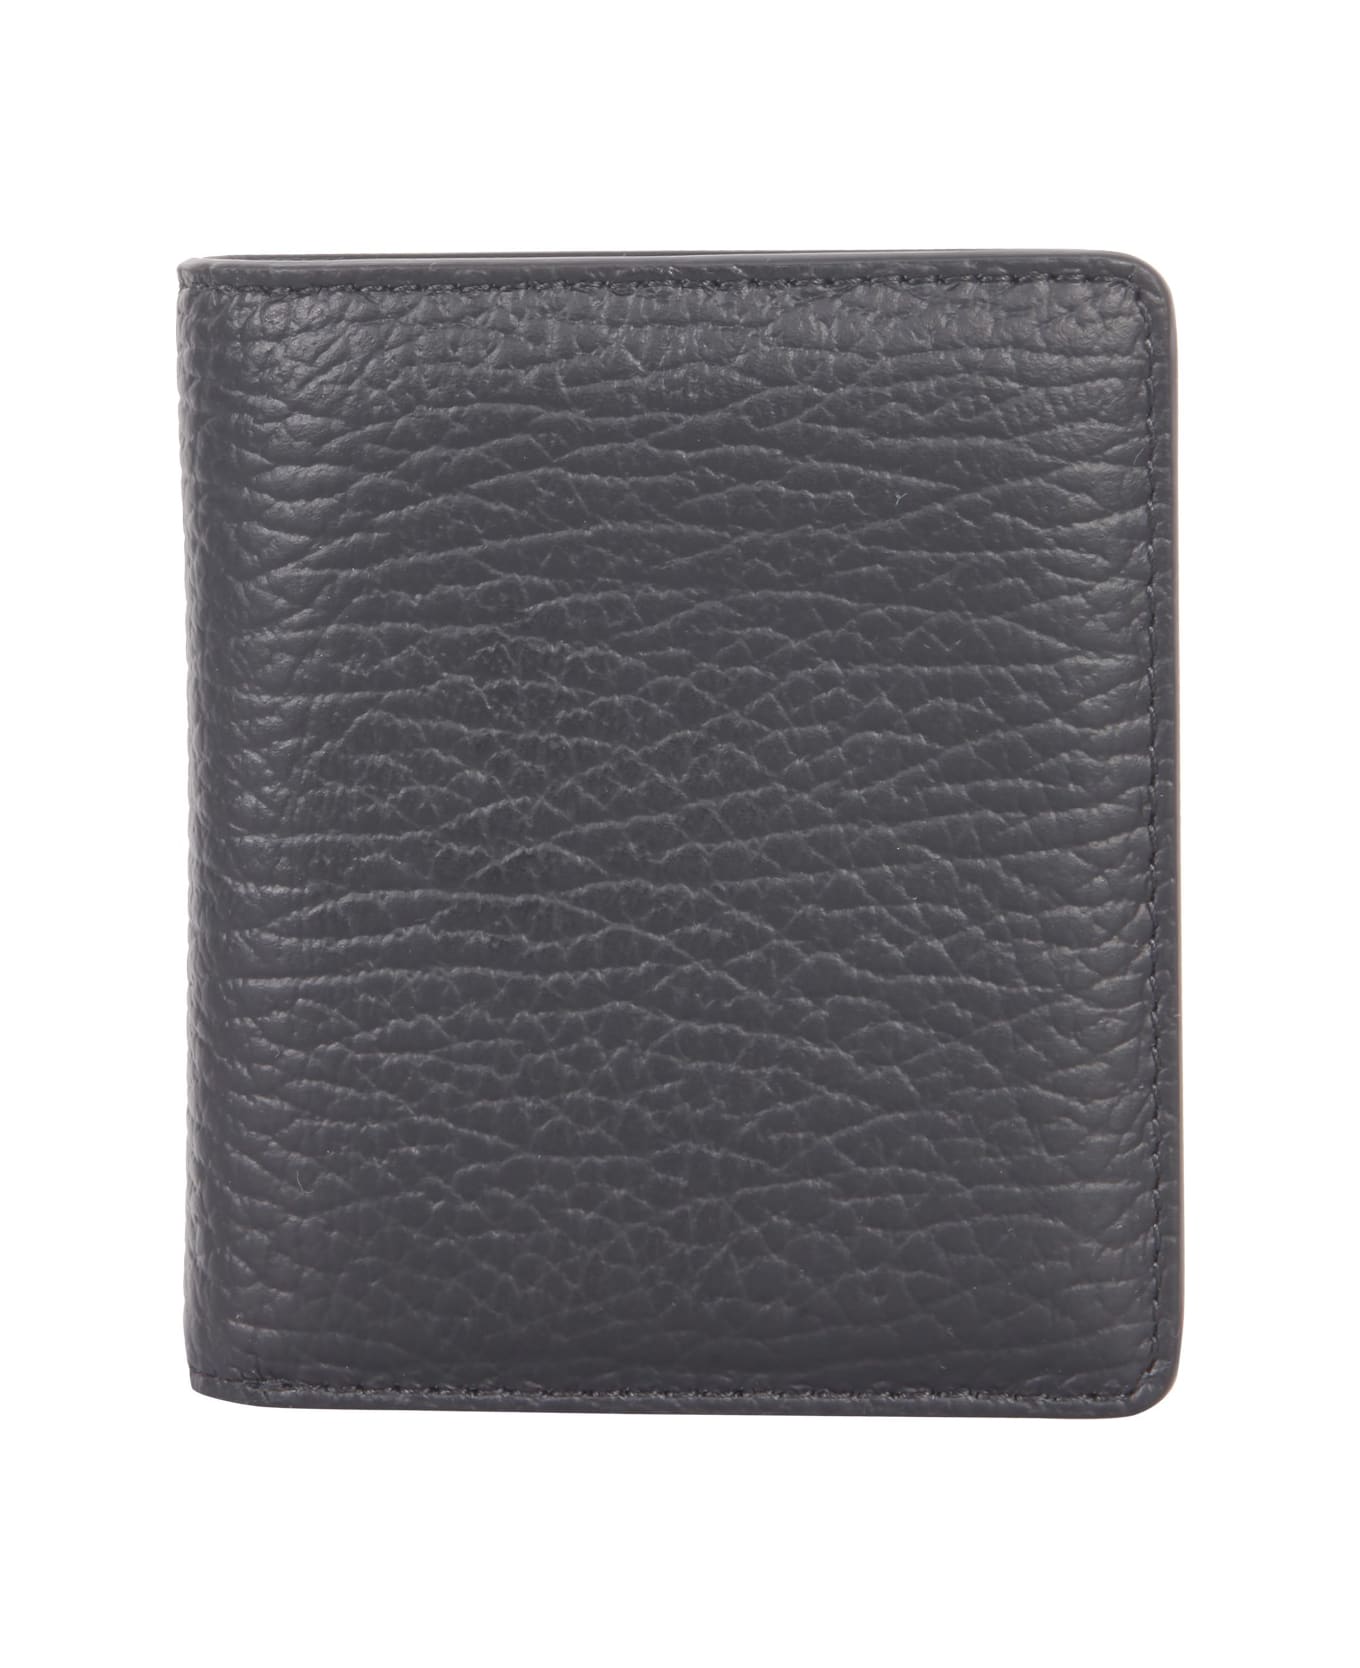 Maison Margiela Compact Bifold Wallet - Black